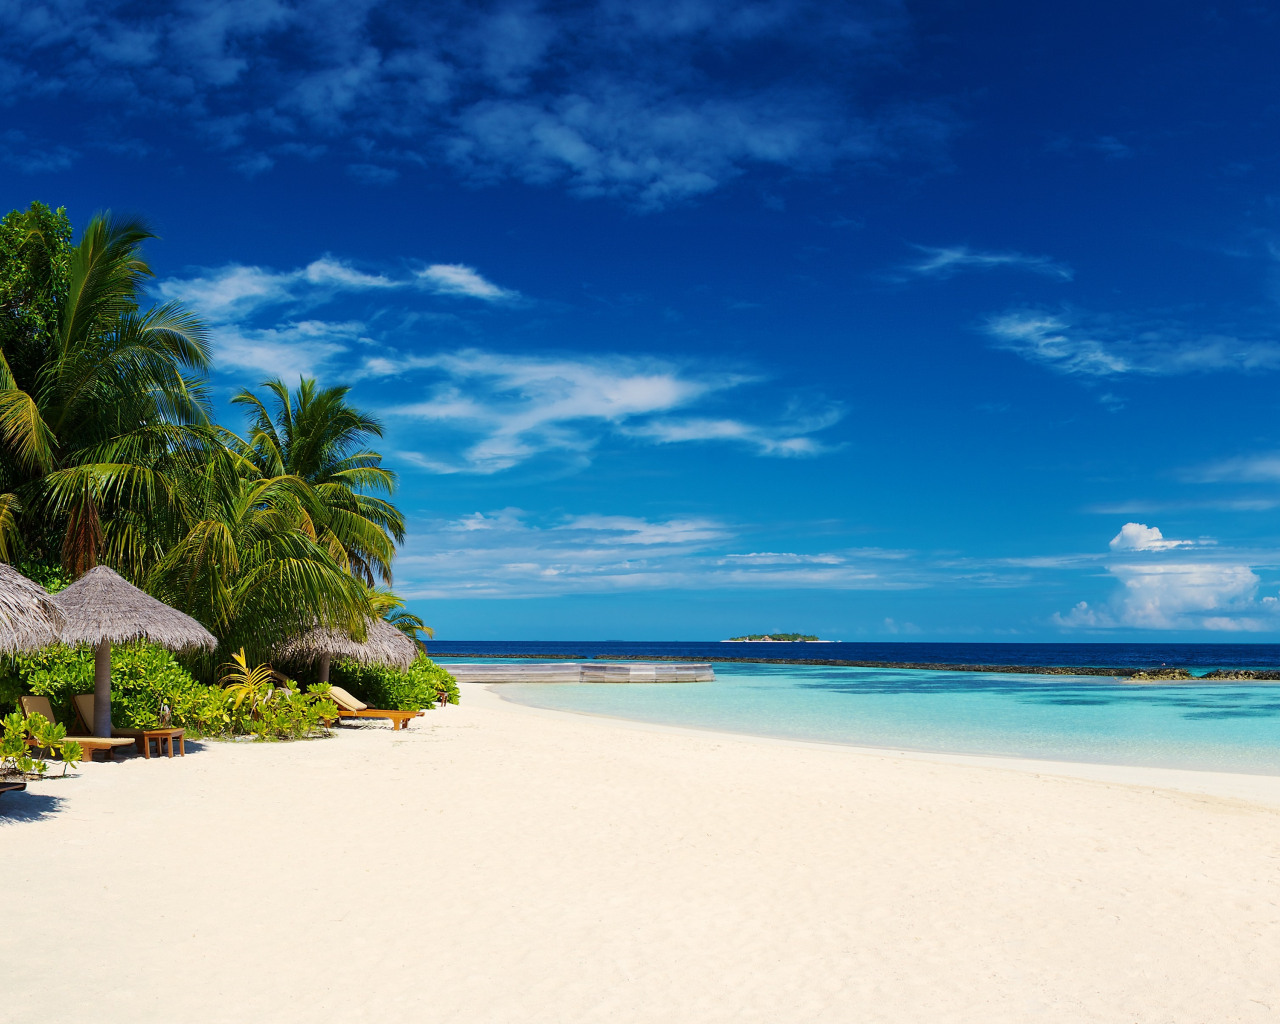 palm trees, побережье, пейзажи, Мальдивские острова, HDR photography, beaches, небо, пляж, пальмы, природа, landscapes, coast, tropical, skies, Maldives, HDR фотографии, nature, sea, тропический, море